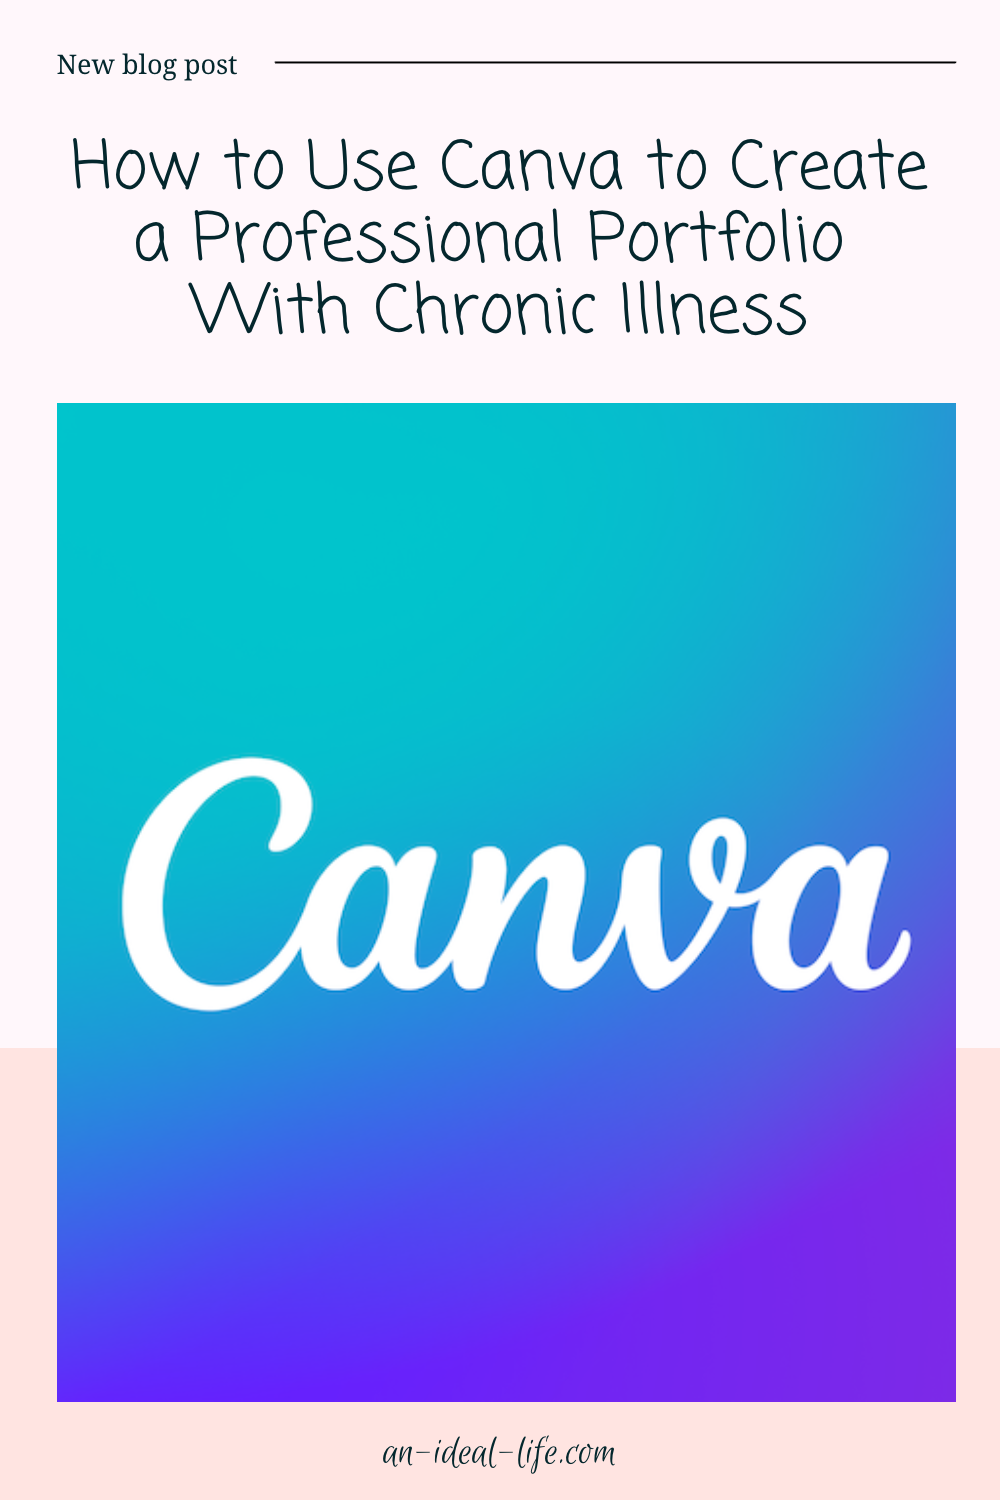 Creating a Professional Portfolio With Chronic Illness